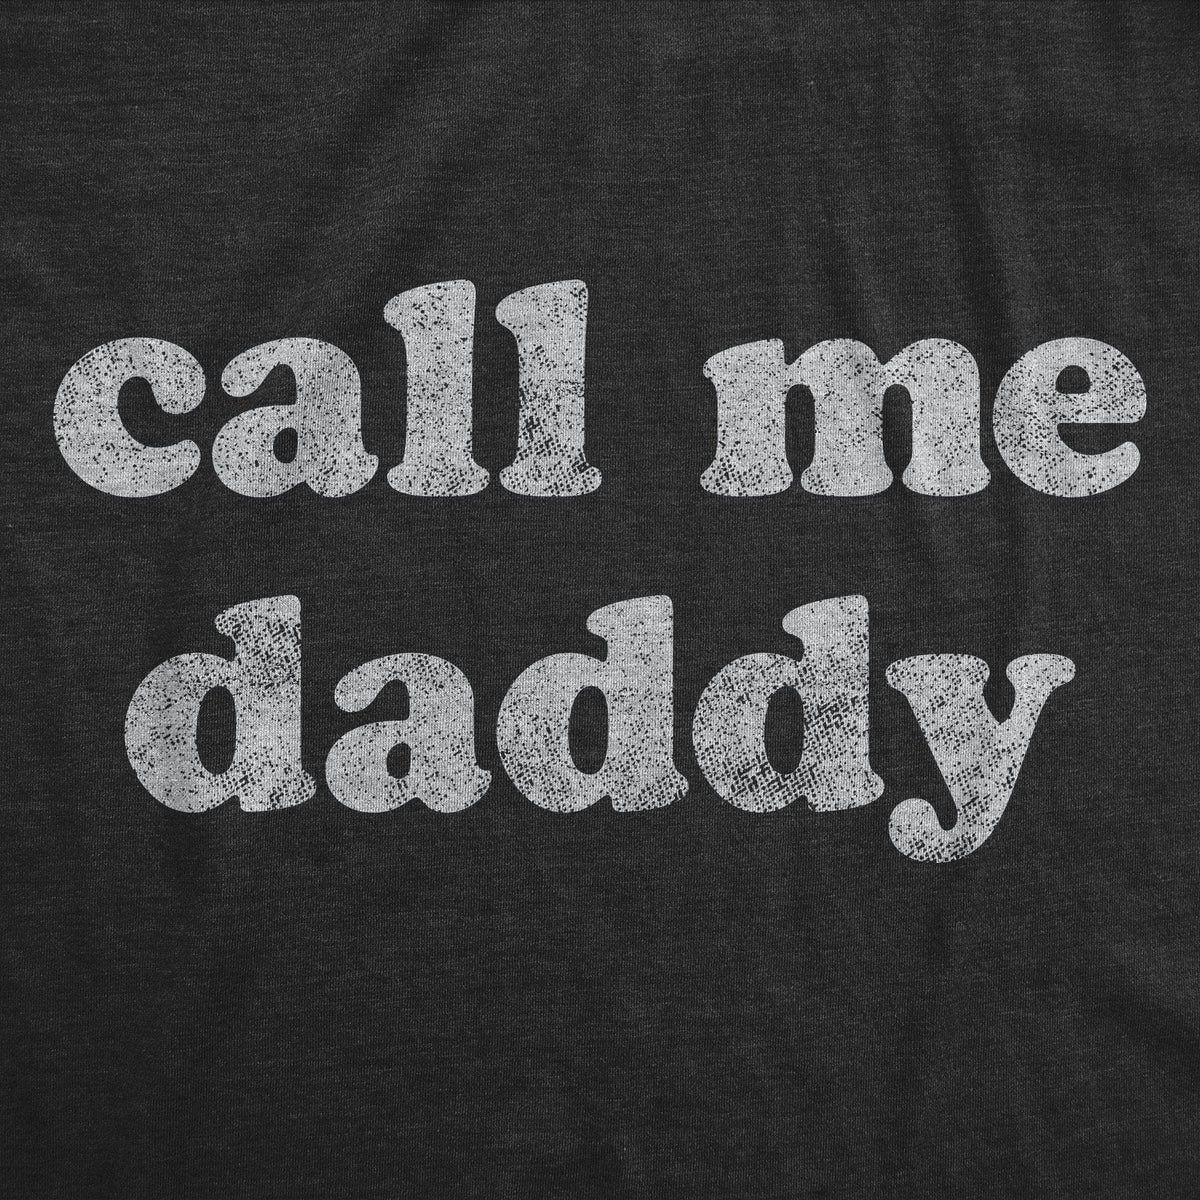 Call Me Daddy Men&#39;s Tshirt - Crazy Dog T-Shirts